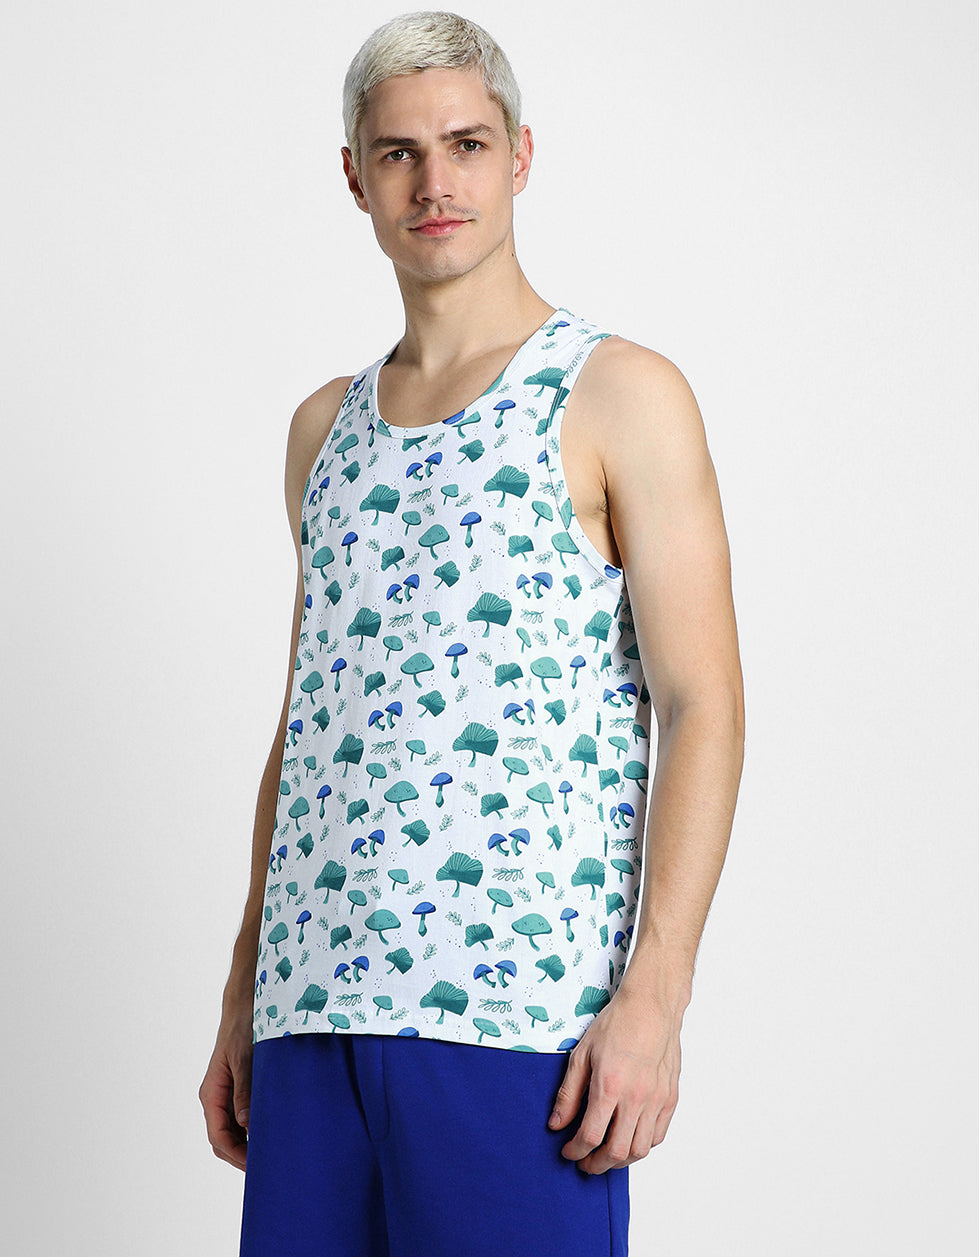 White & Blue Mushroom Printed Gym Vest